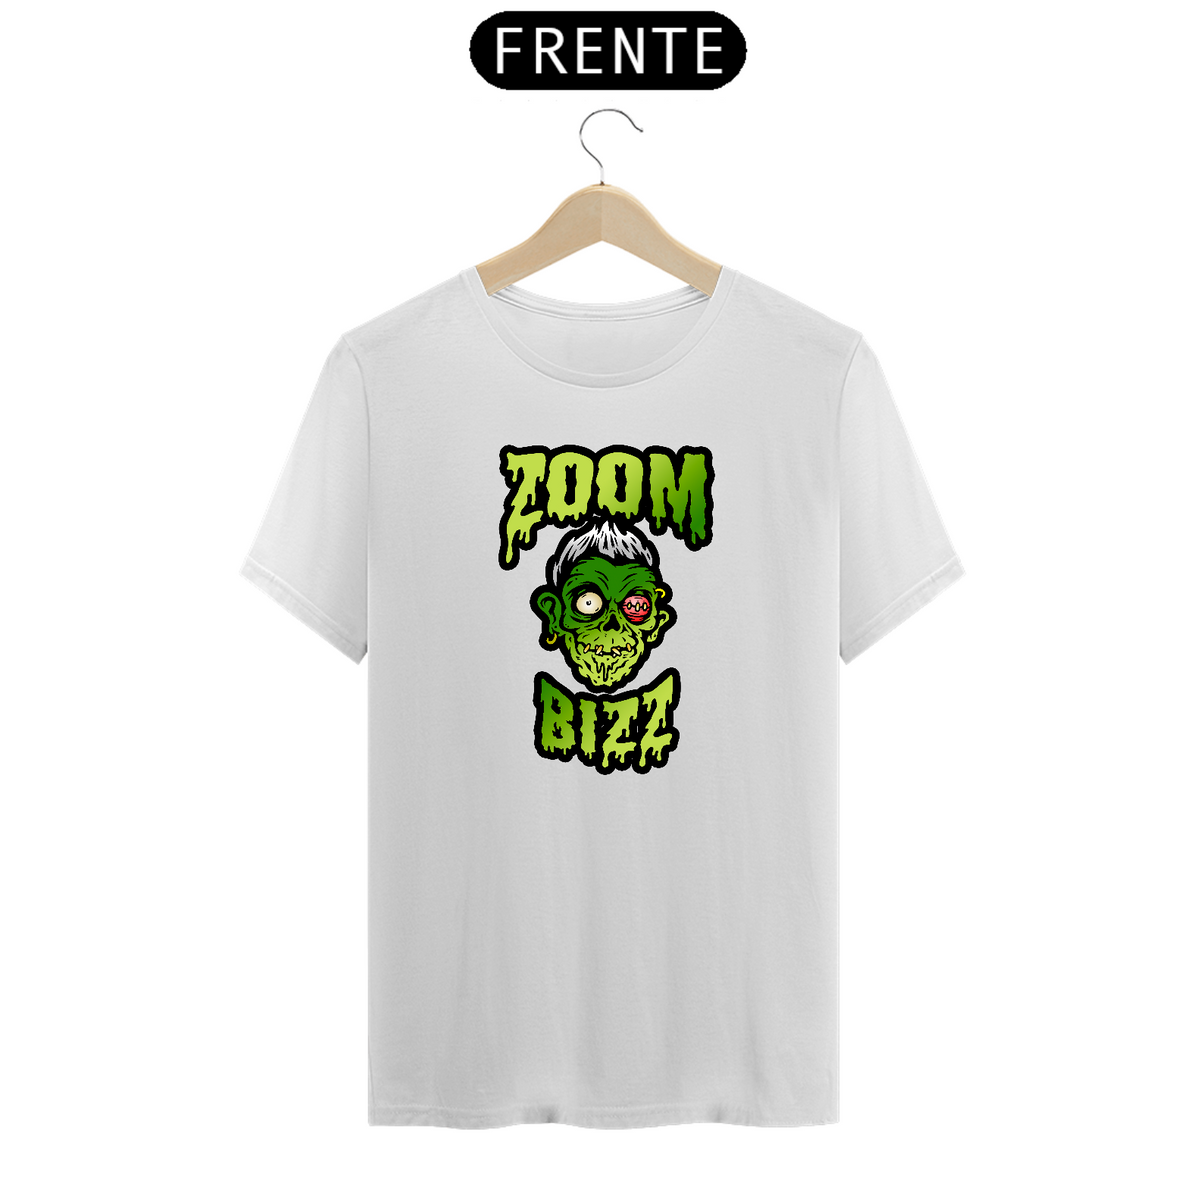 Nome do produto: ZoomBizz